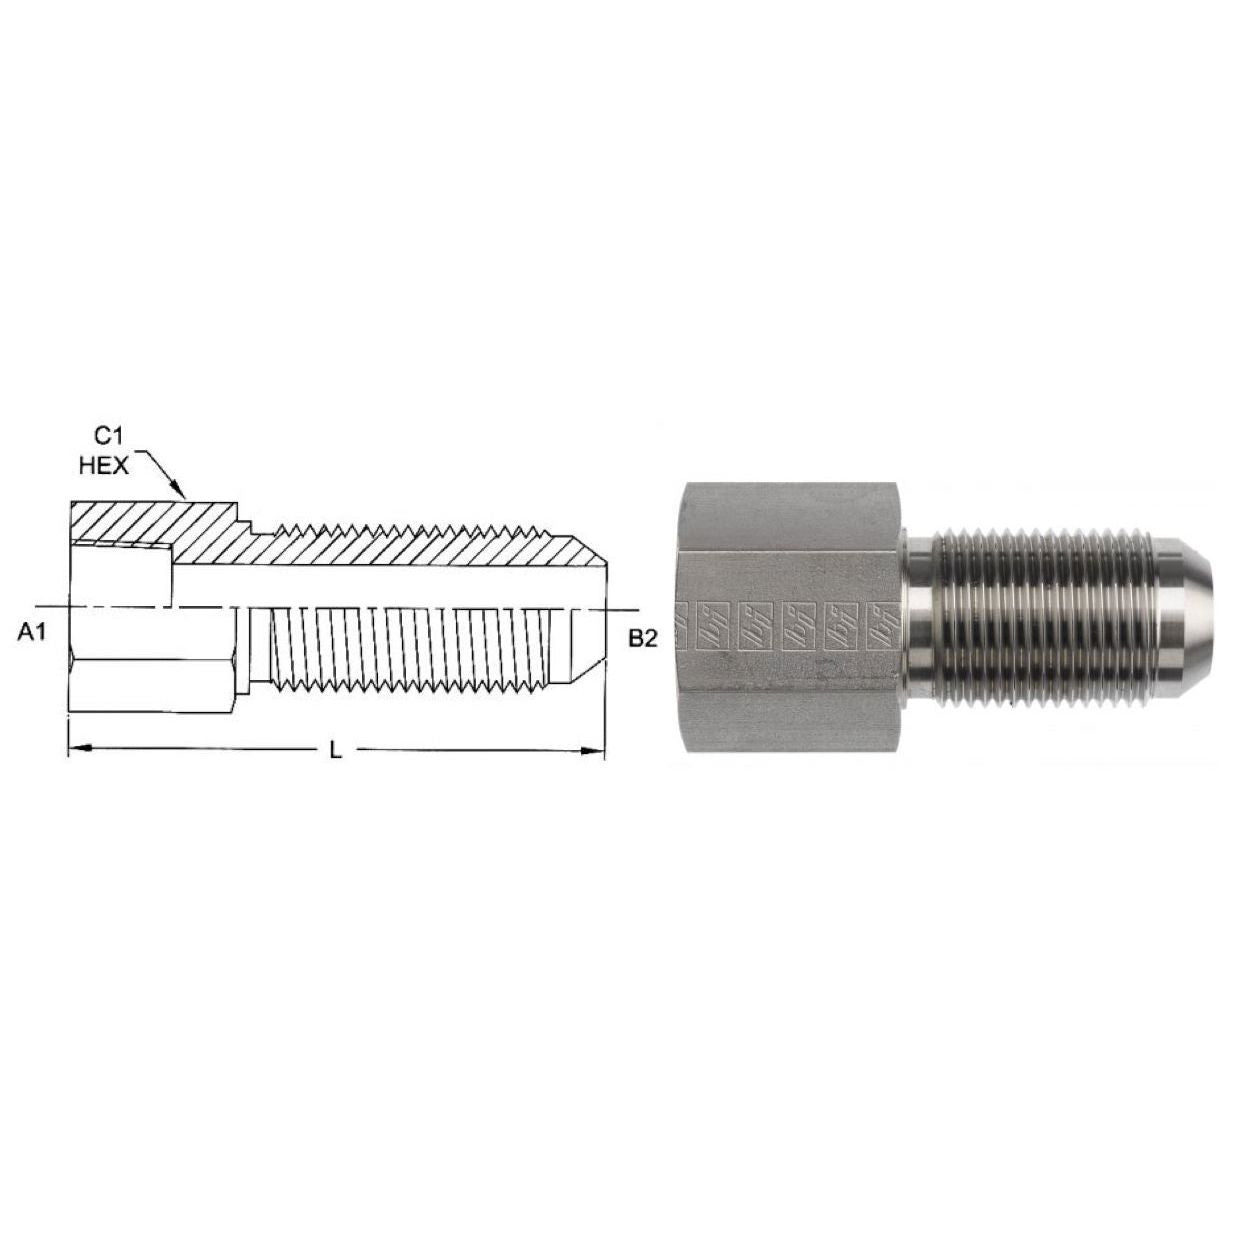 2705-12-12 : OneHydraulics Bulkhead Adapter, Straight, 0.75 (3/4") JIC JIC x 0.75 (3/4") Male, Steel, 4000psi